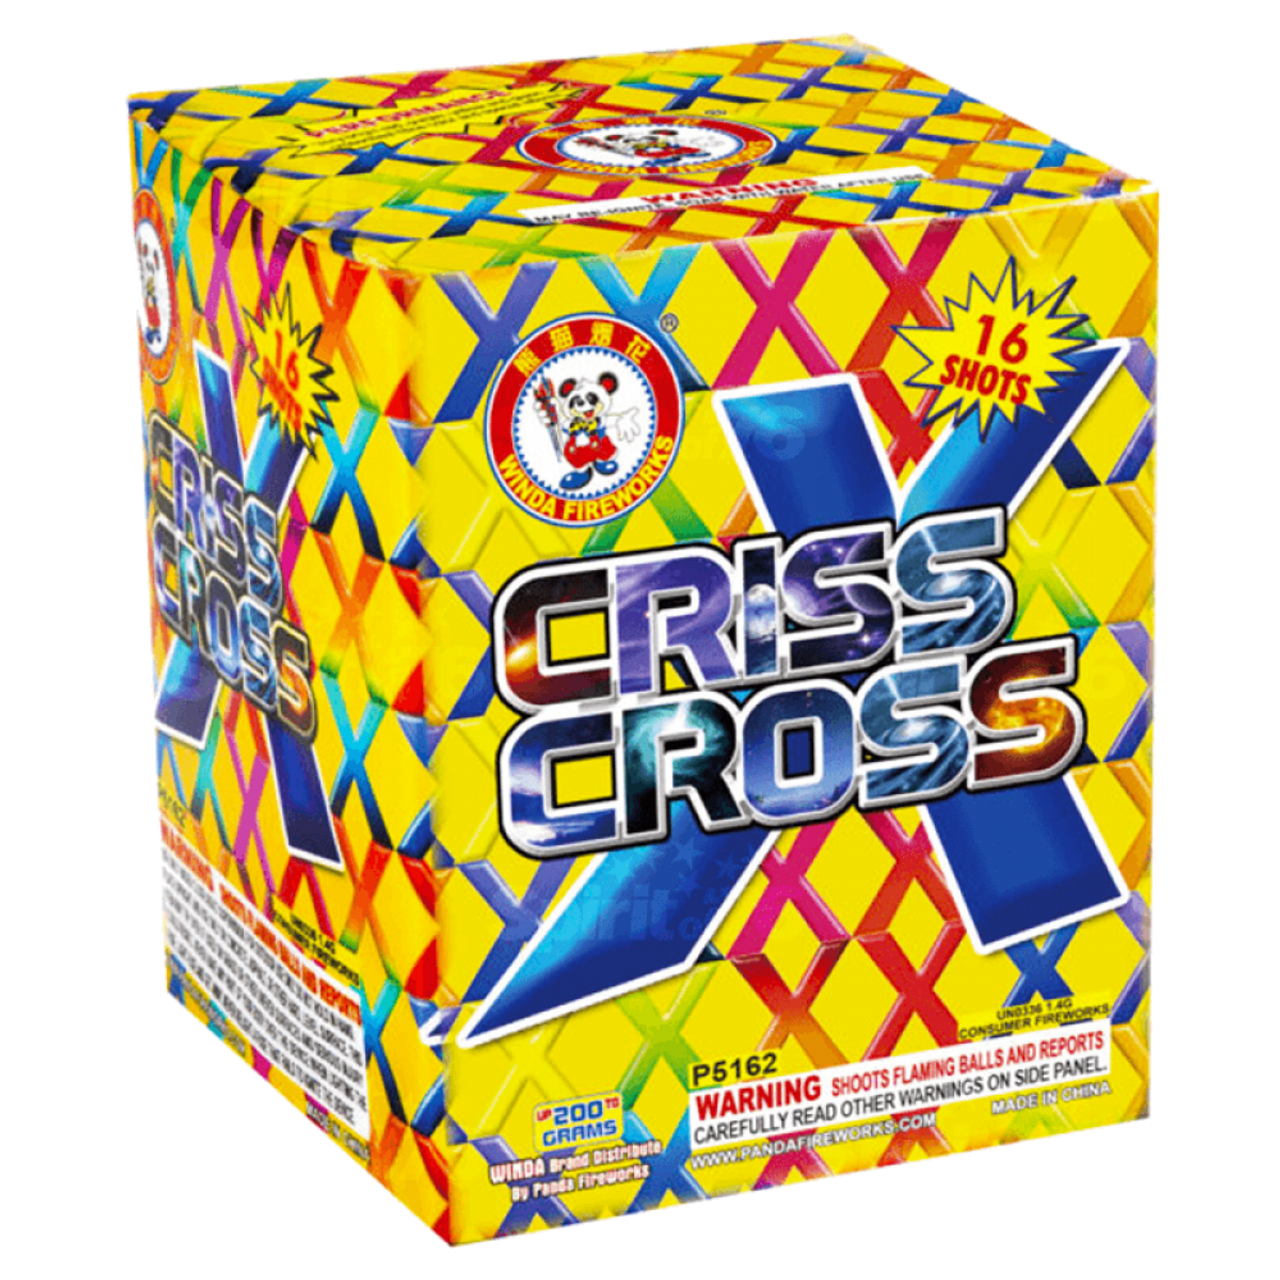 Criss Cross American Wholesale Fireworks